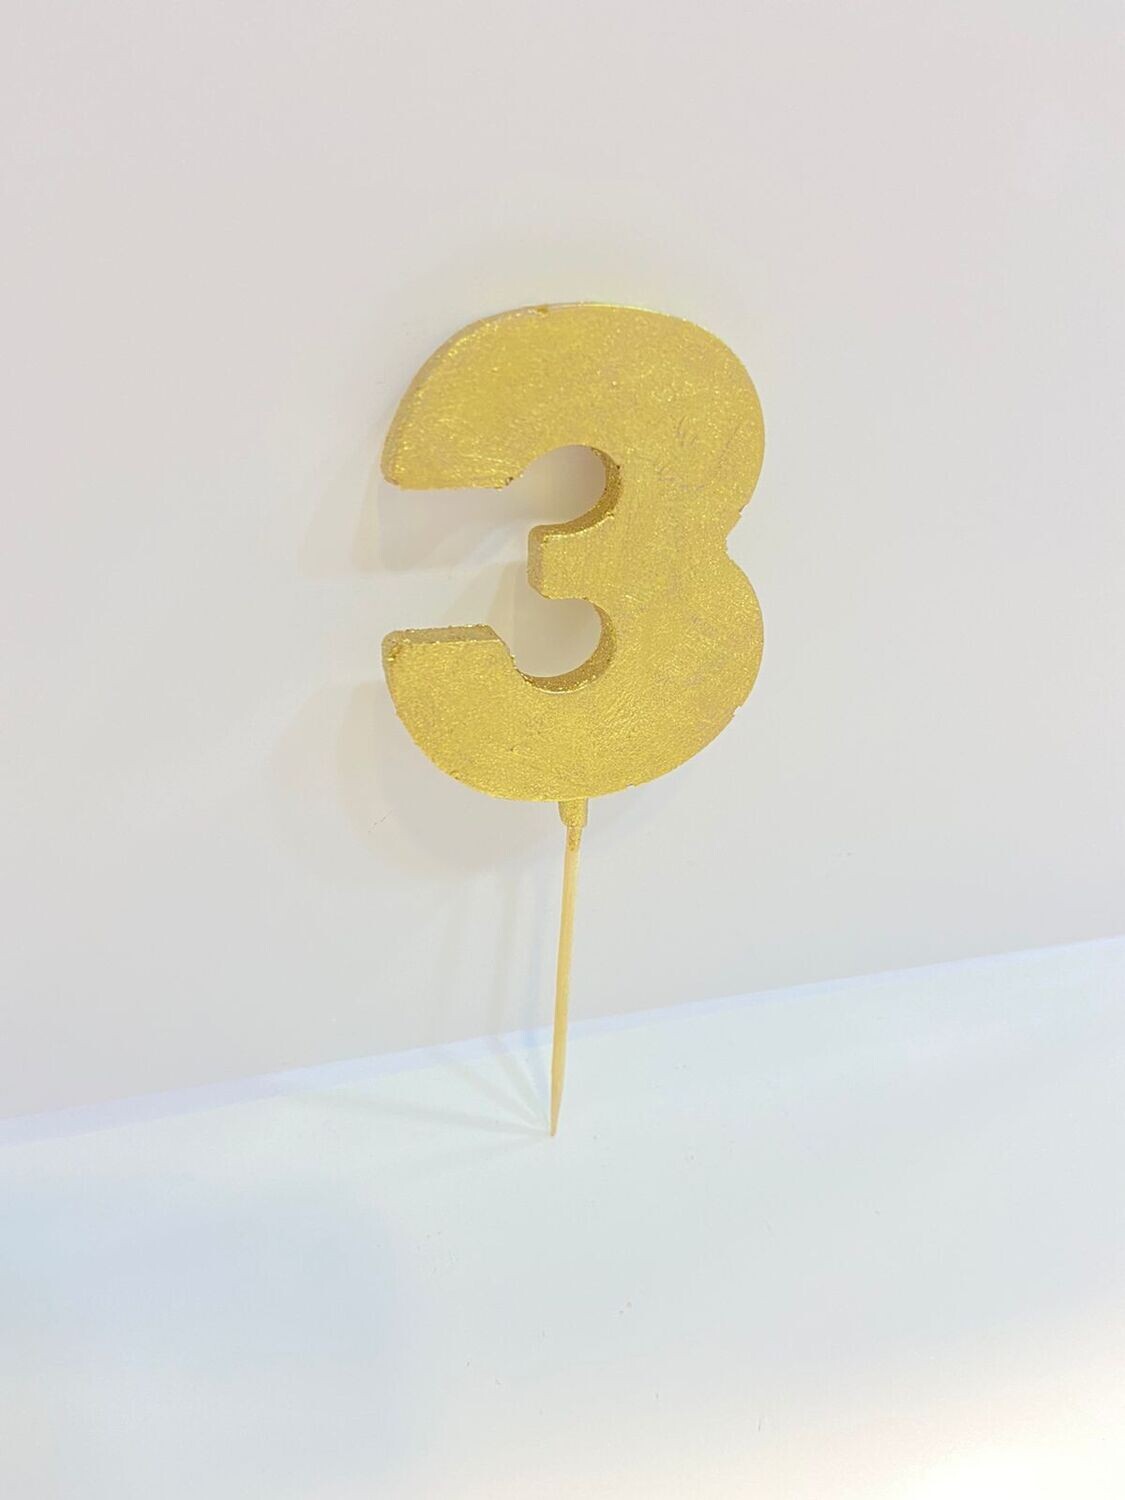 Цифра "3" АНТИЧНАЯ (золотая) на шпажке, из шоколадной глазури